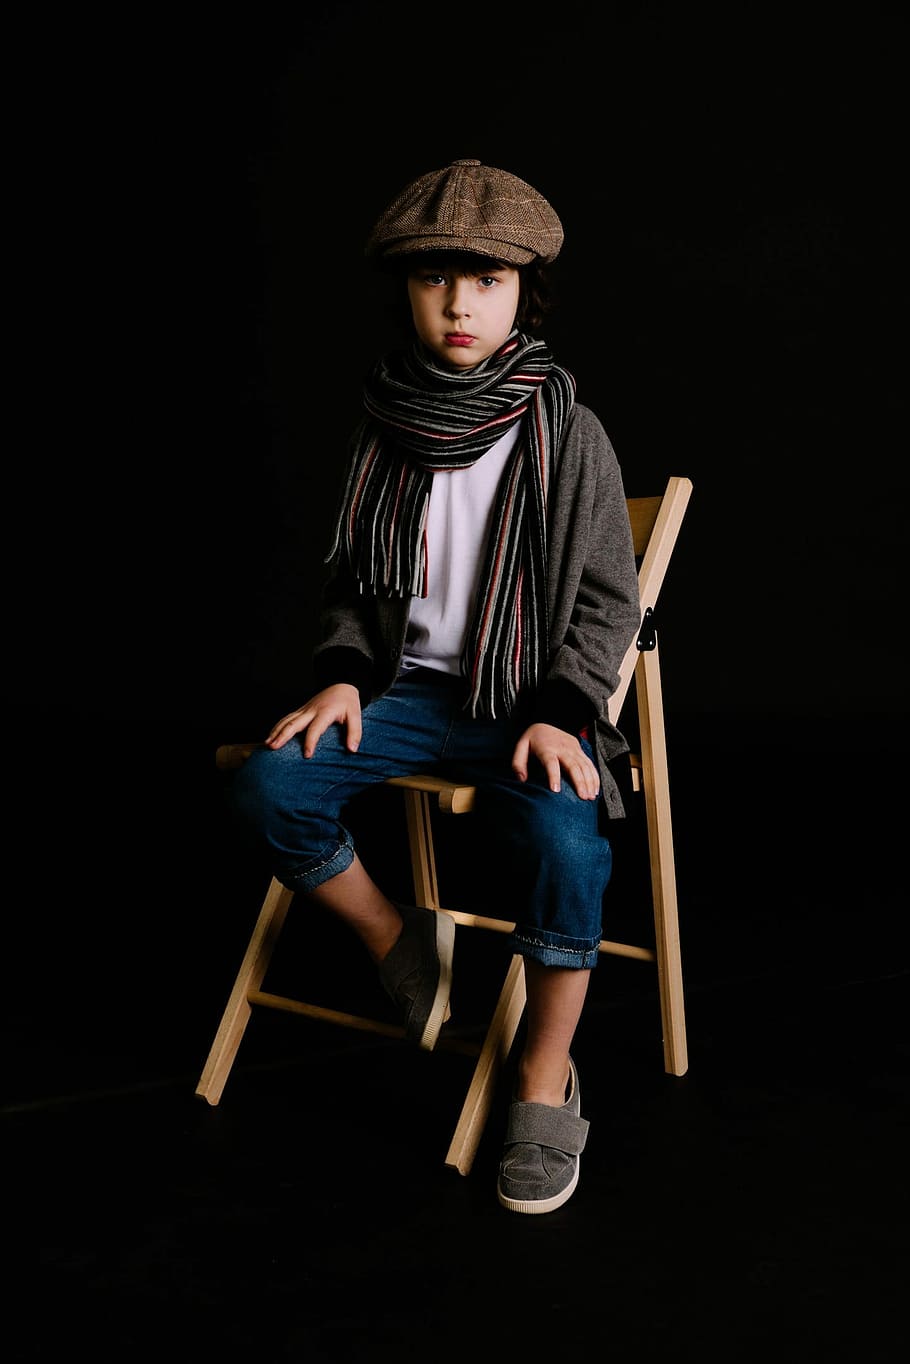 Tess 3 Month ~ Britt 3 Year Photos {Kids} | Children photography poses,  Children photography outdoors, Boy photography